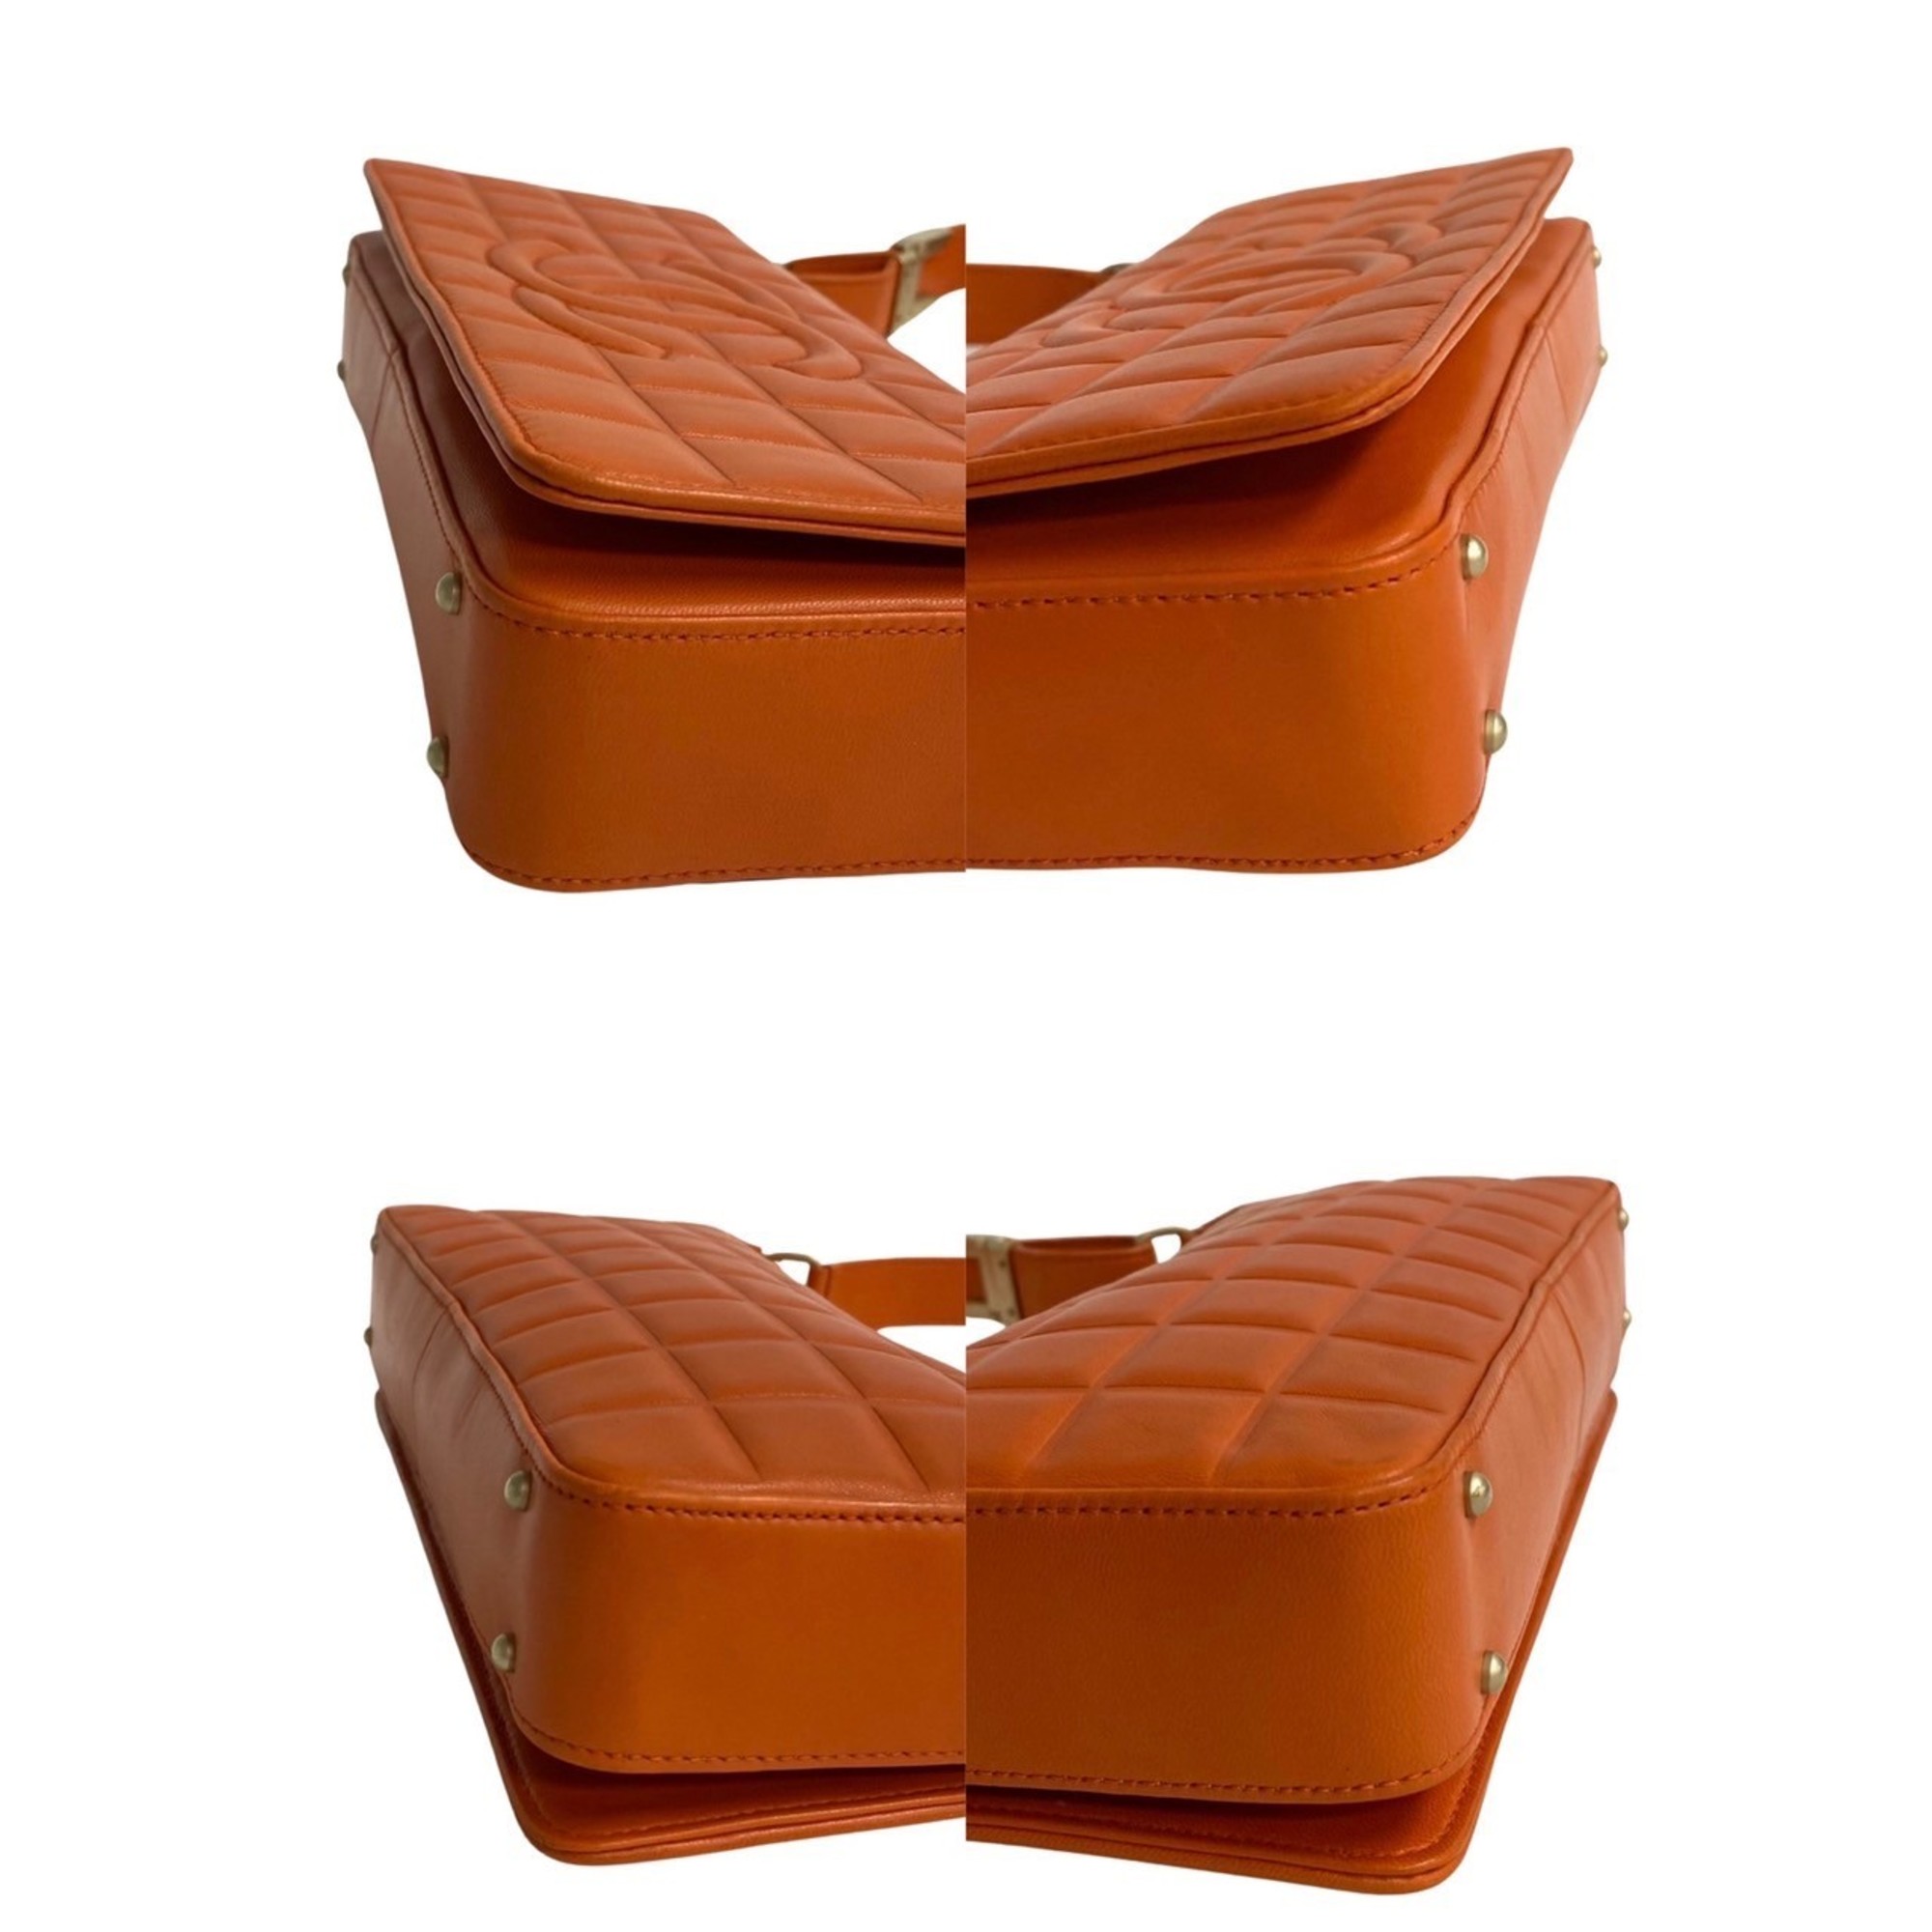 CHANEL Chocolate Bar Leather Handbag One Semi Shoulder Bag Orange 6kmk521-2